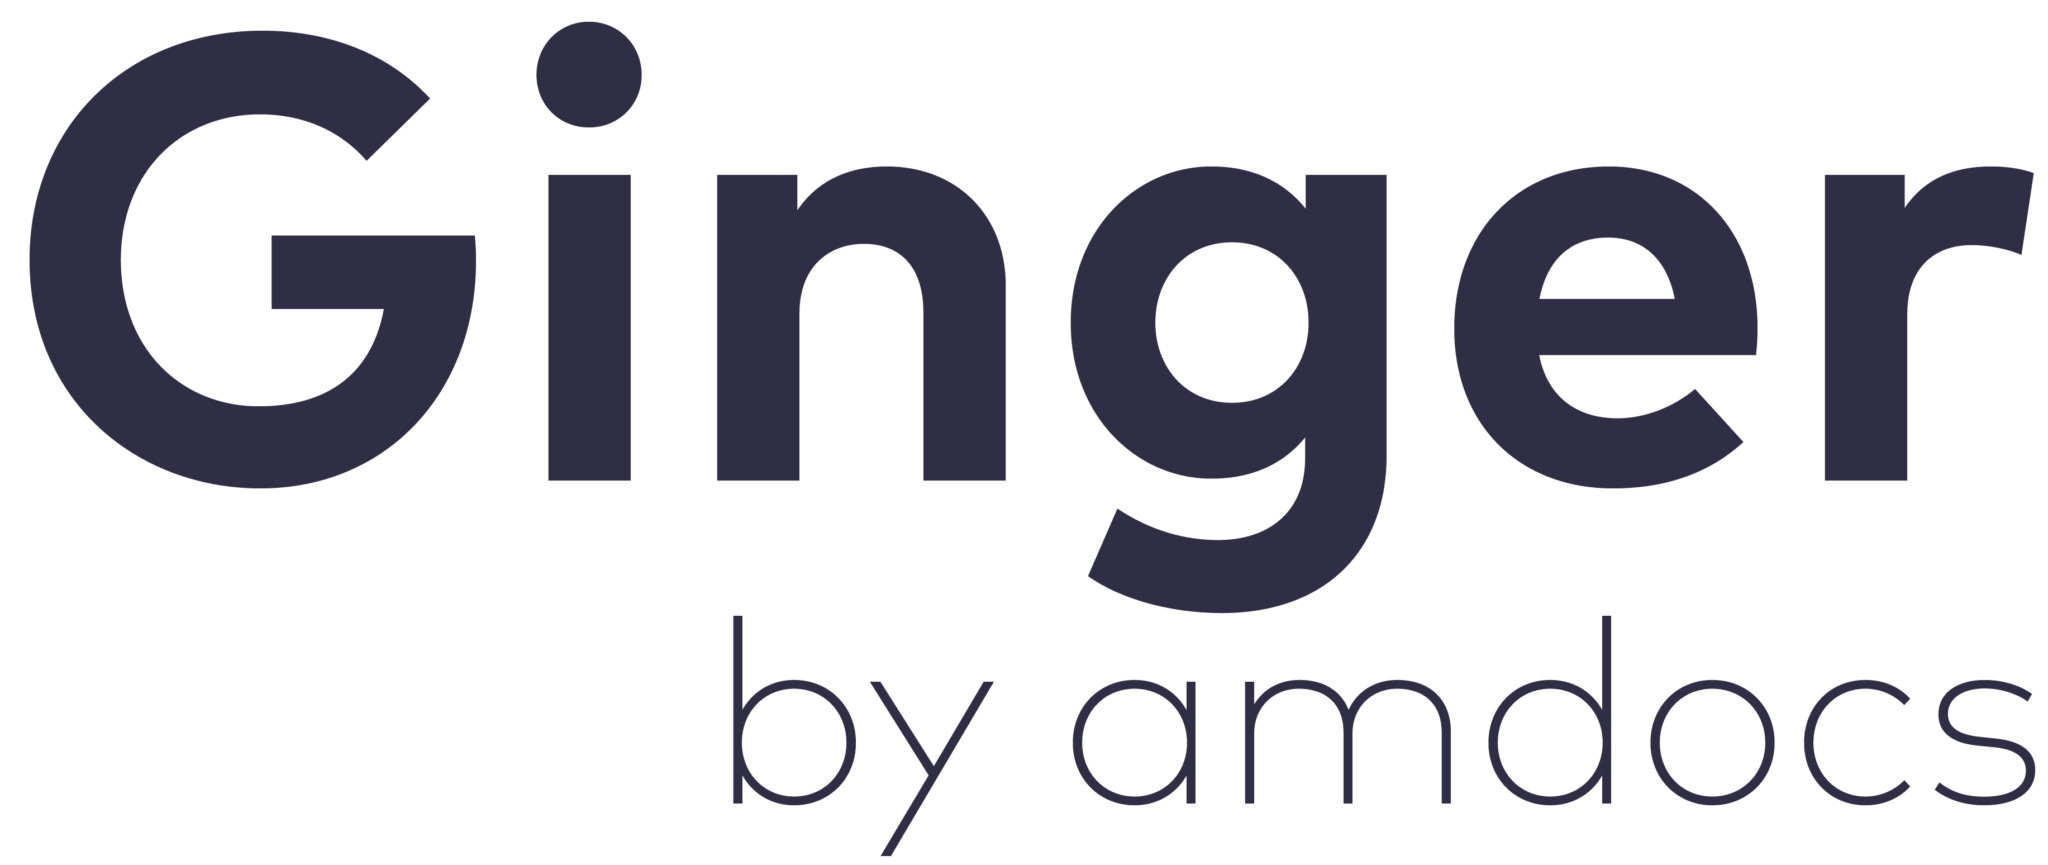 Ginger by Amdocs : Brand Short Description Type Here.